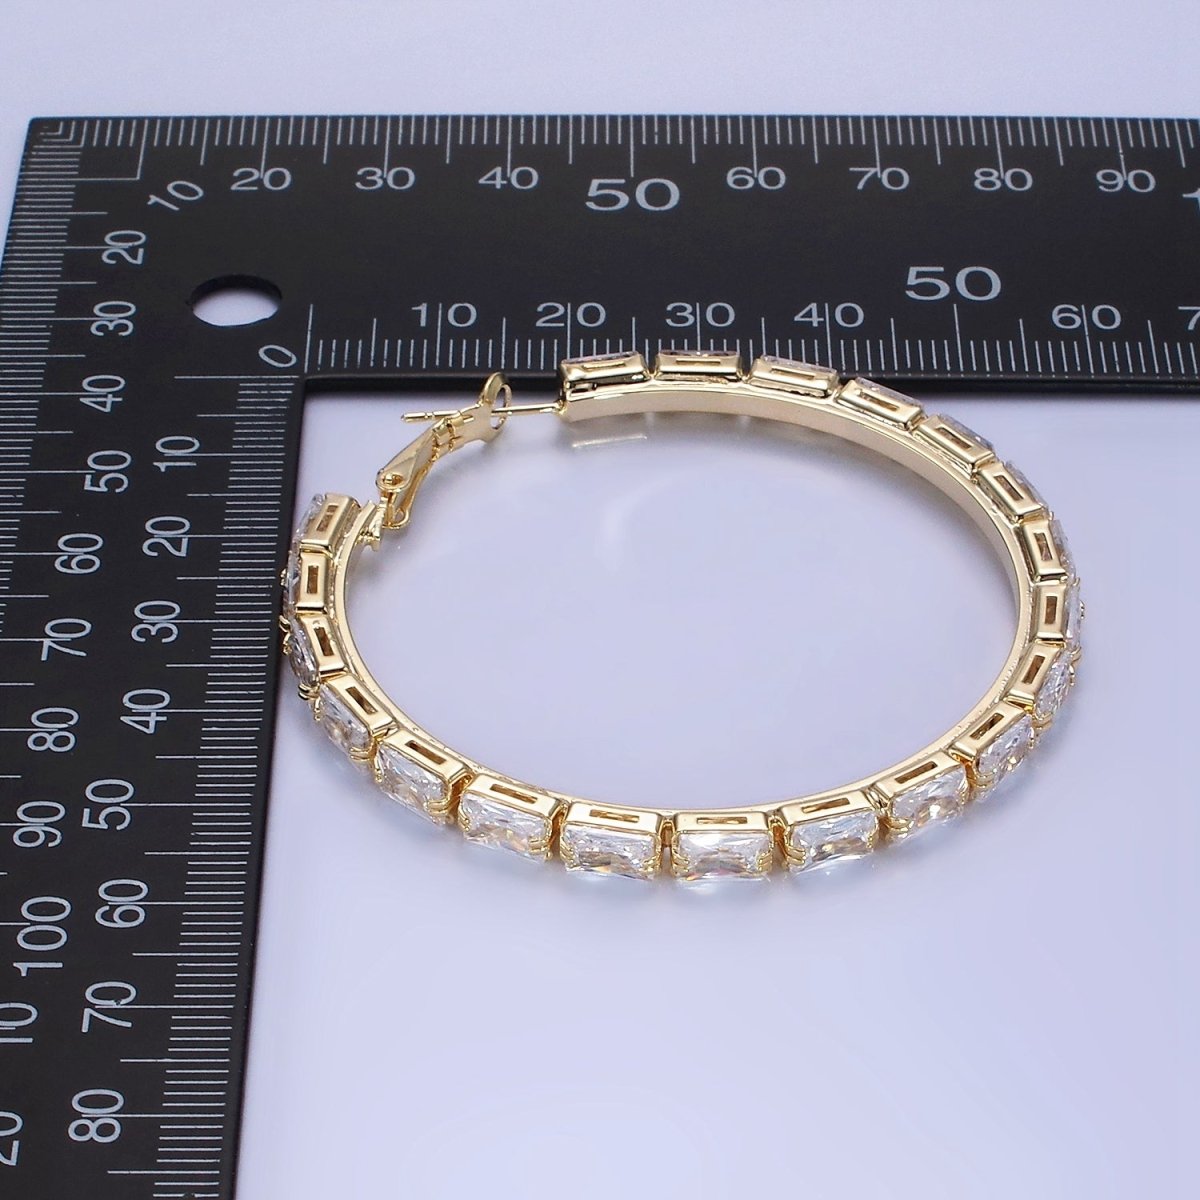 14K Gold Filled 55mm Clear CZ Baguette Hinge Hoop Earrings in Gold & Silver | AE493 AE494 - DLUXCA